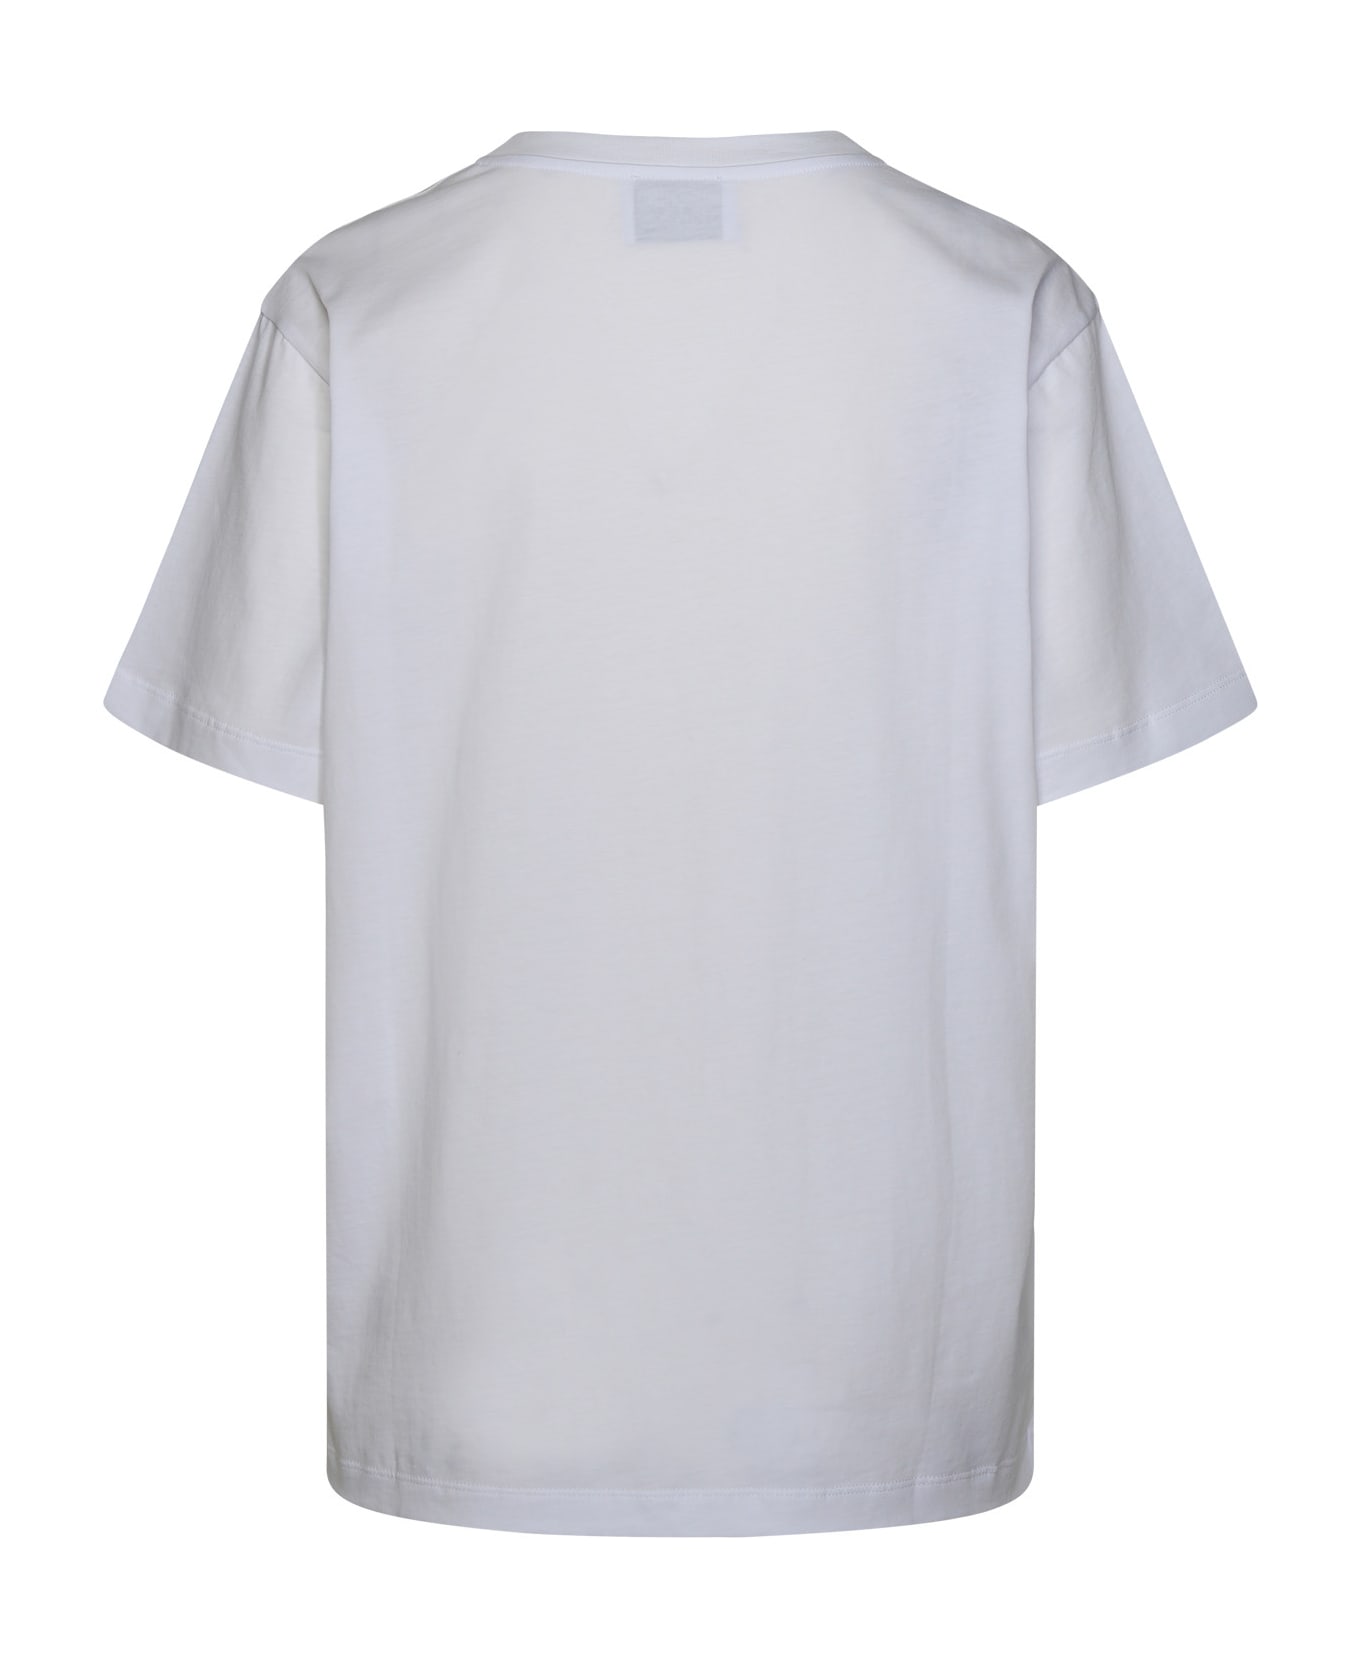 M05CH1N0 Jeans White Cotton T-shirt - Fantasia Bianco